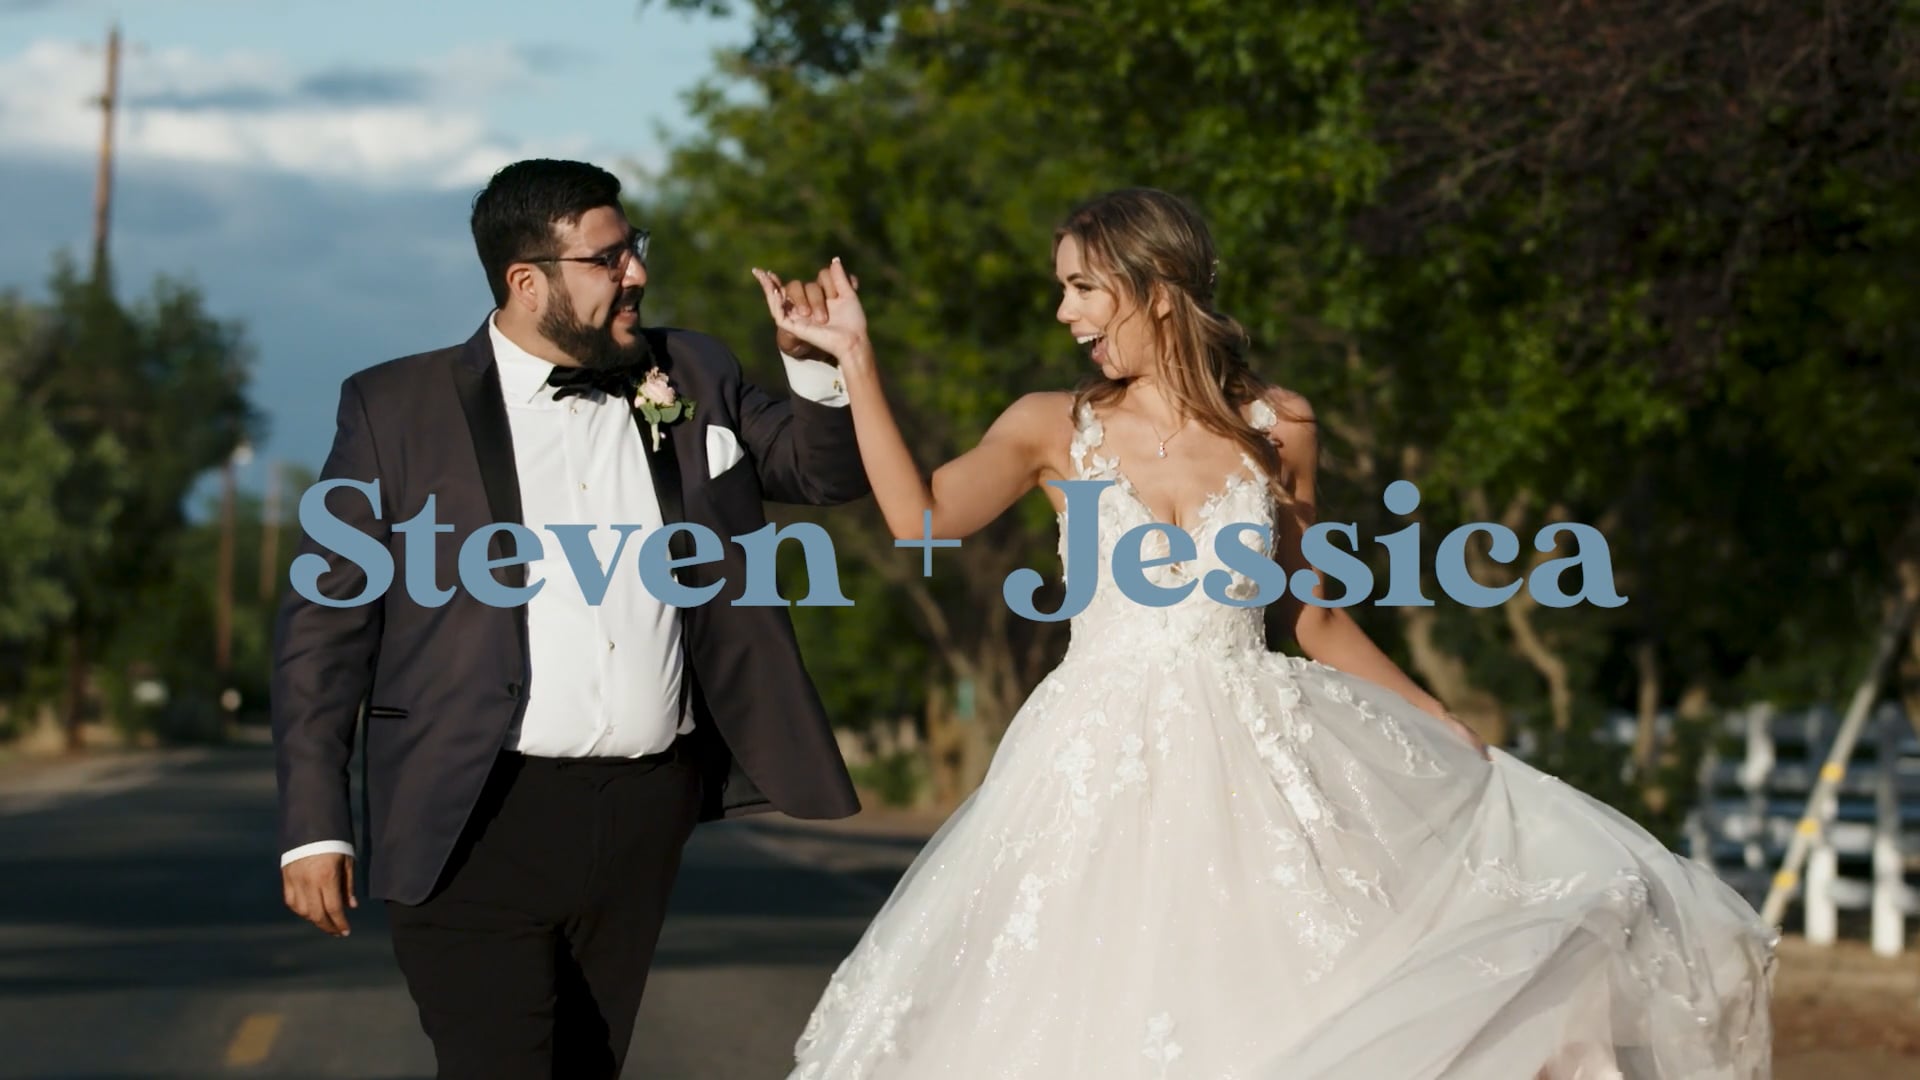 Jessica + Steven | Wedding Film